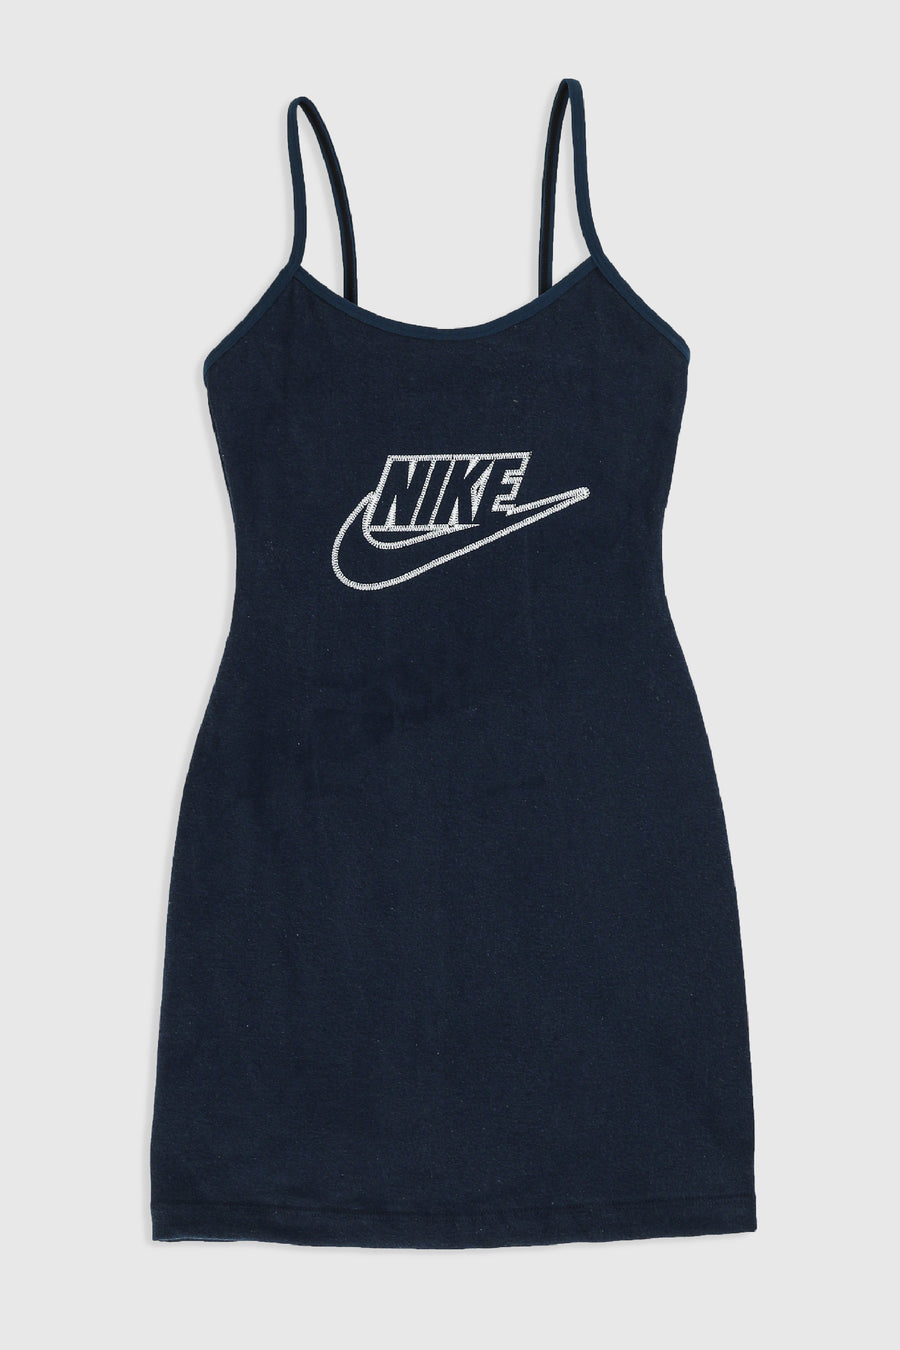 Rework Nike Mini Dress - S